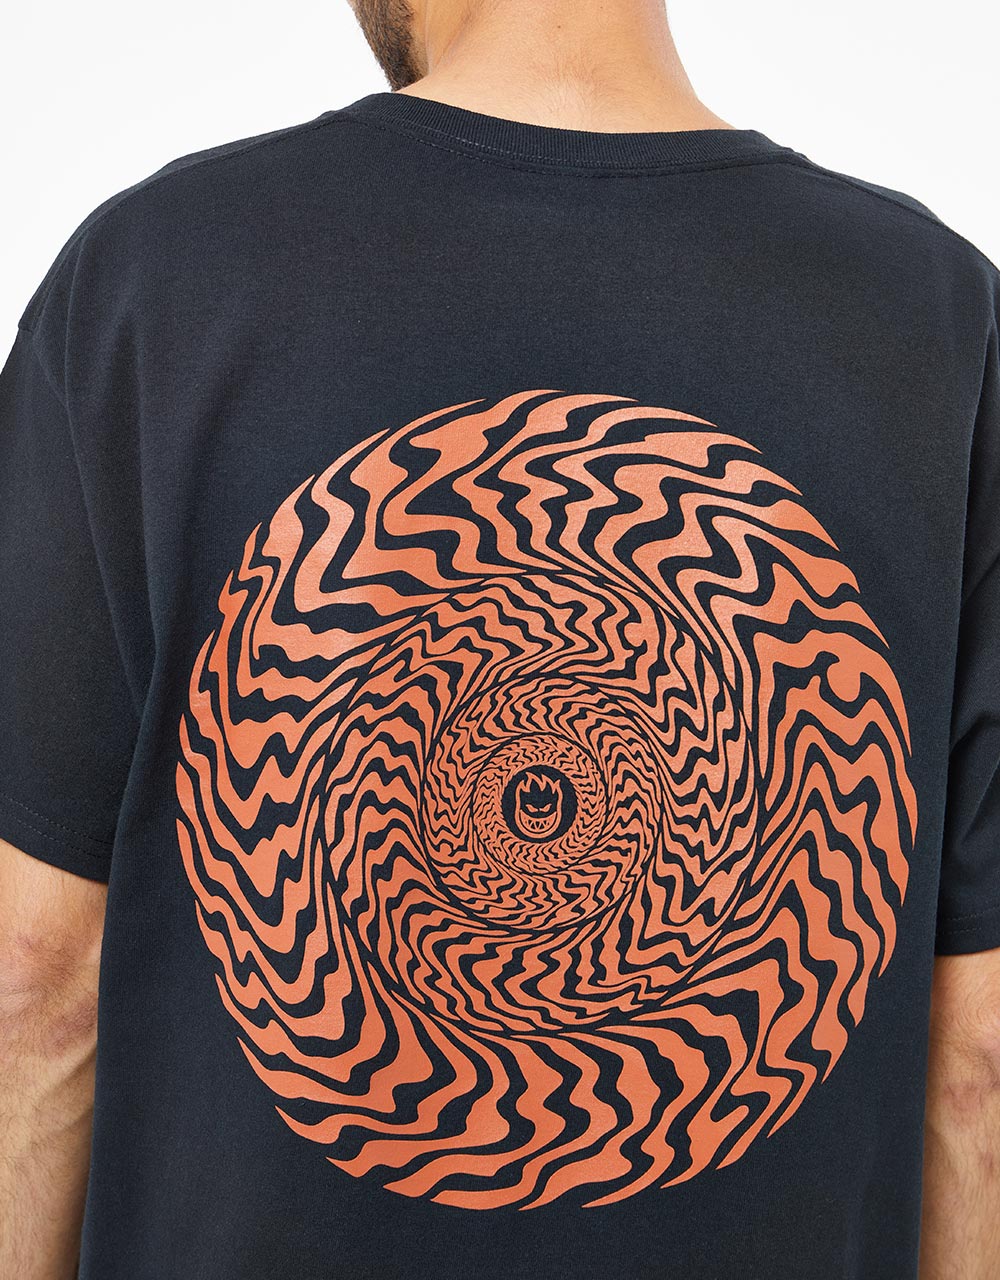 Spitfire Swirled Classic T-Shirt - Black/Burnt Orange